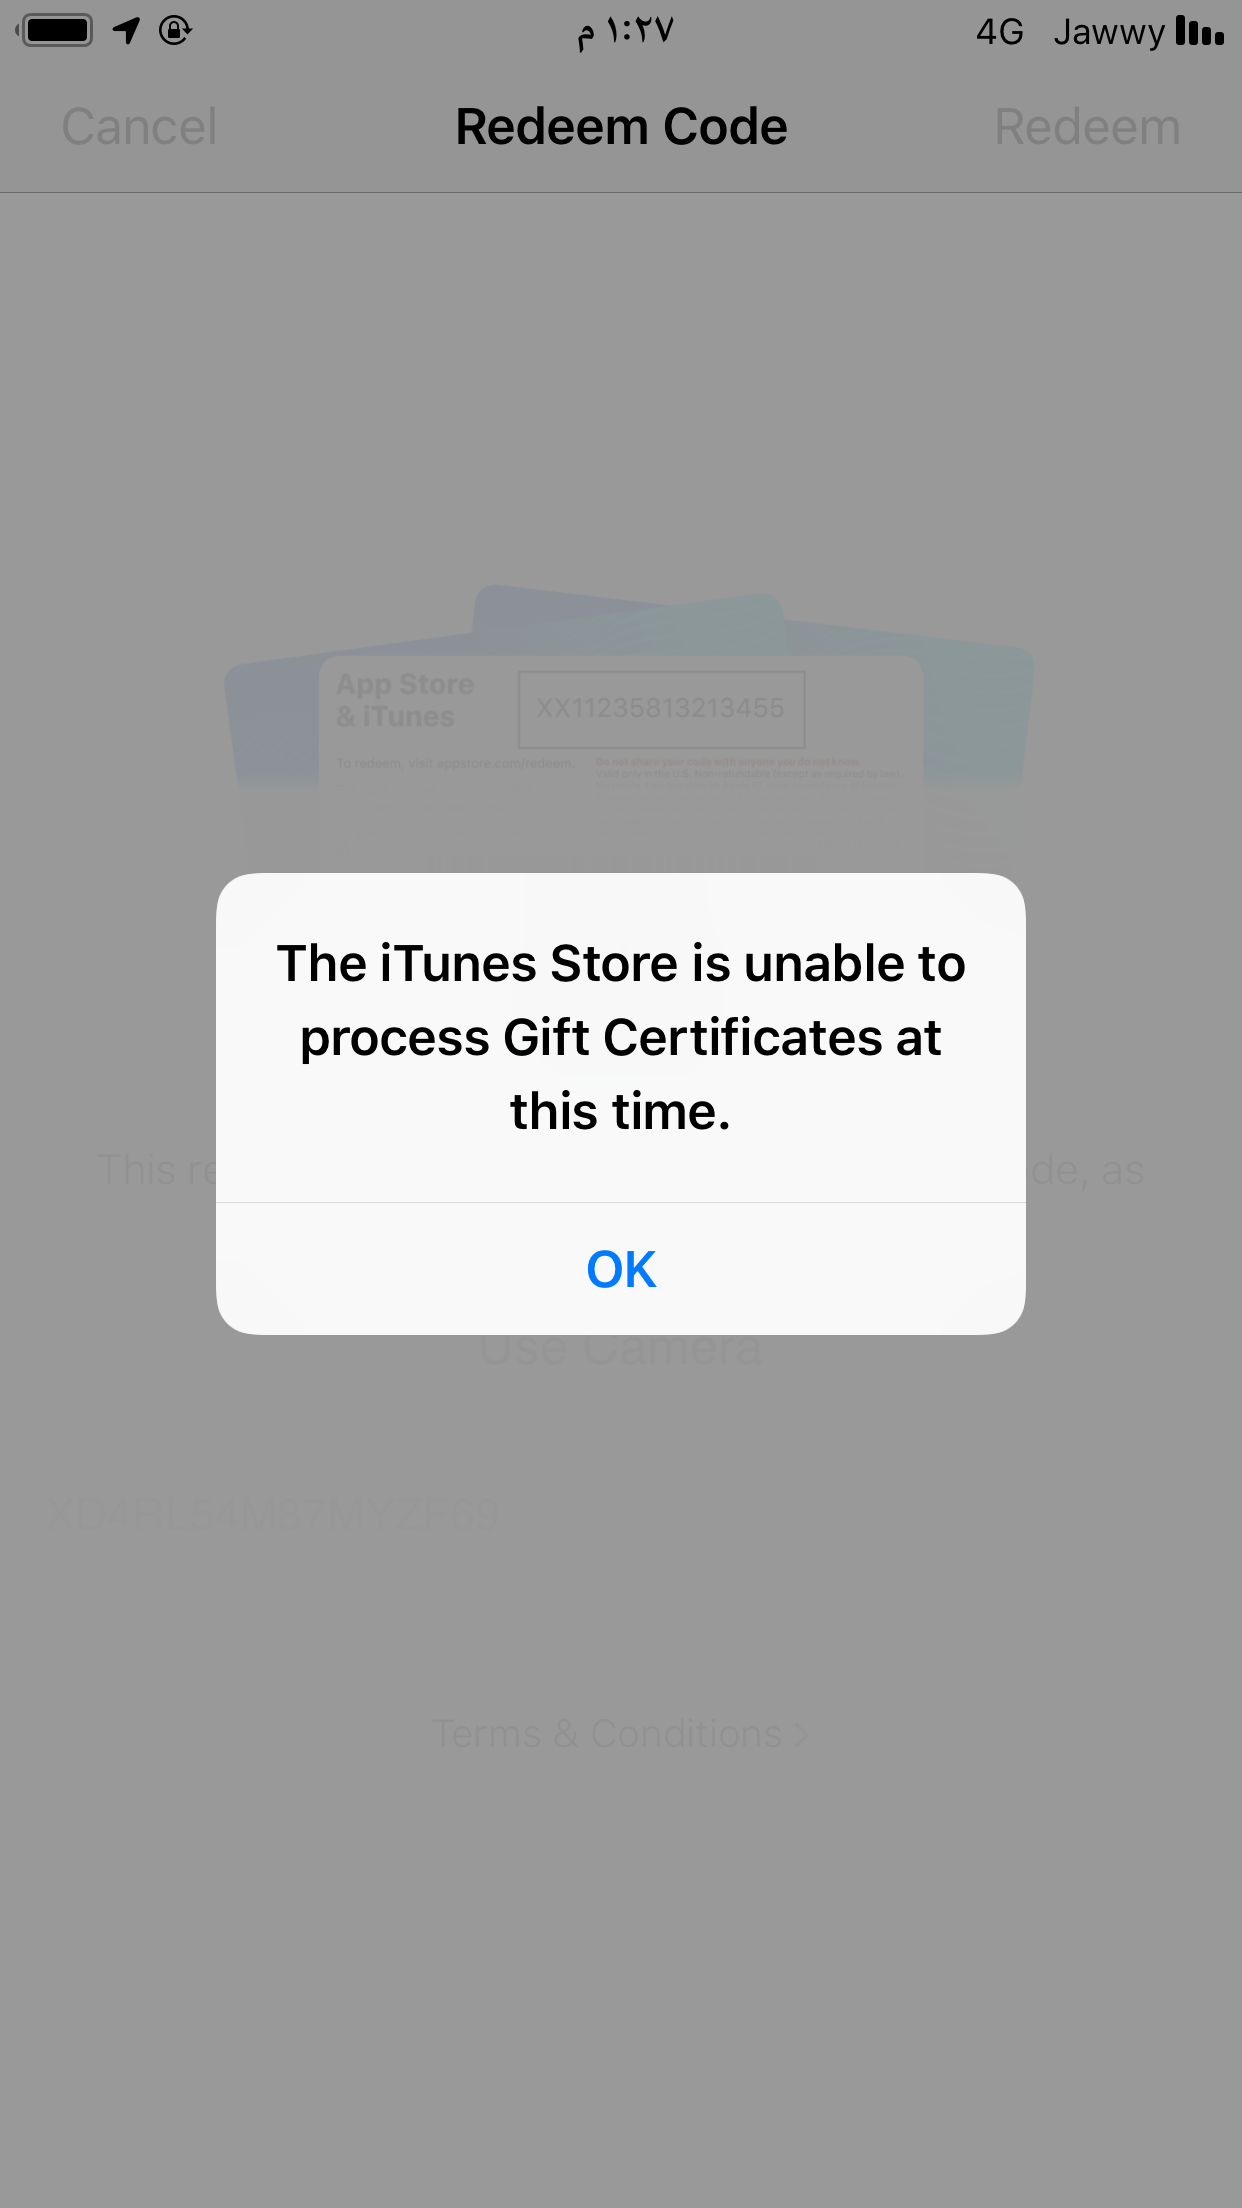 apple gift card not valid - Apple Community